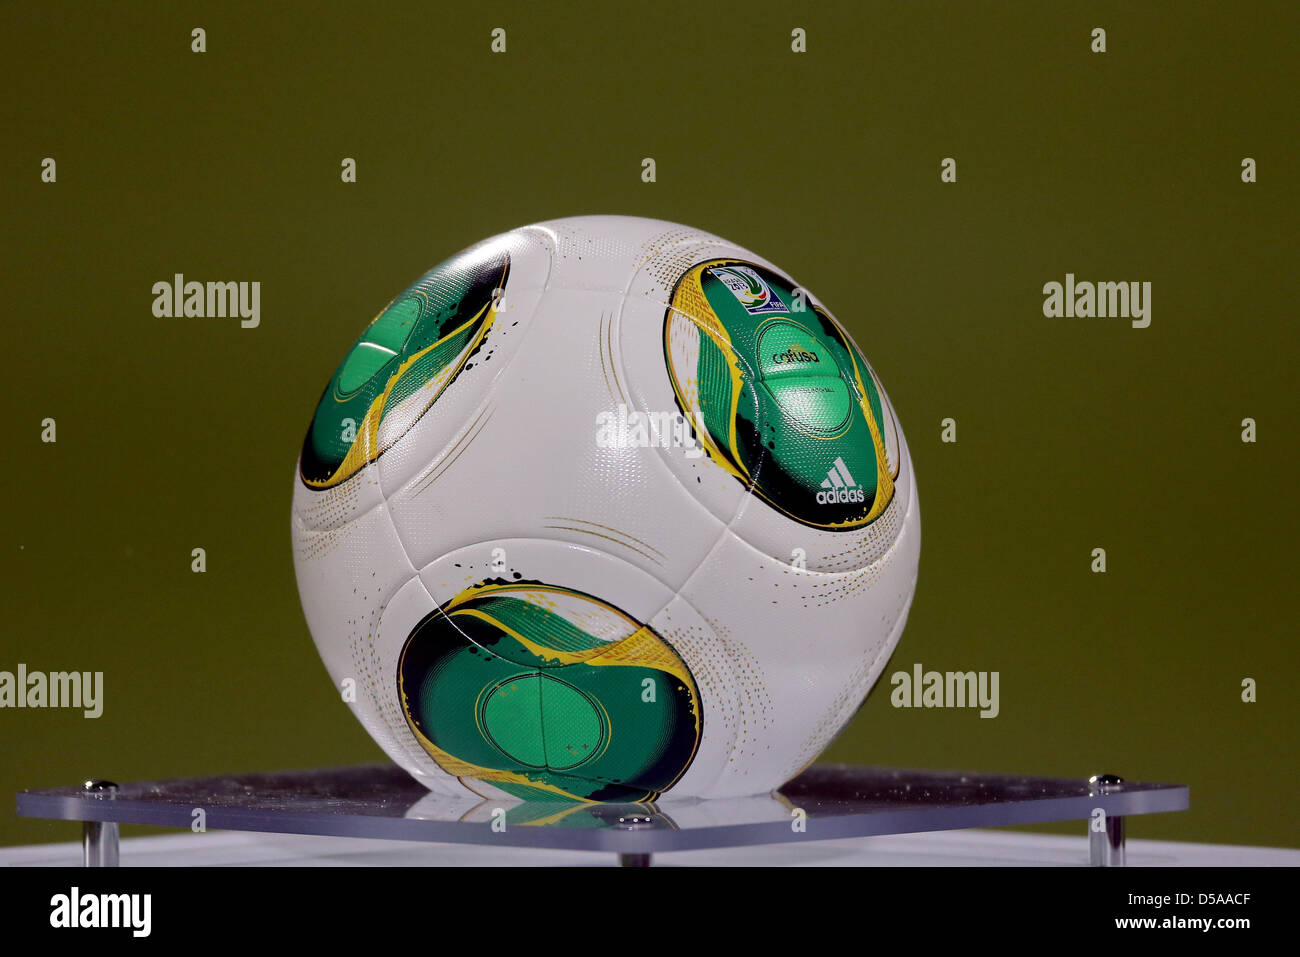 https://c8.alamy.com/comp/D5AACF/the-match-ball-named-cafusa-designed-for-the-football-world-championships-D5AACF.jpg